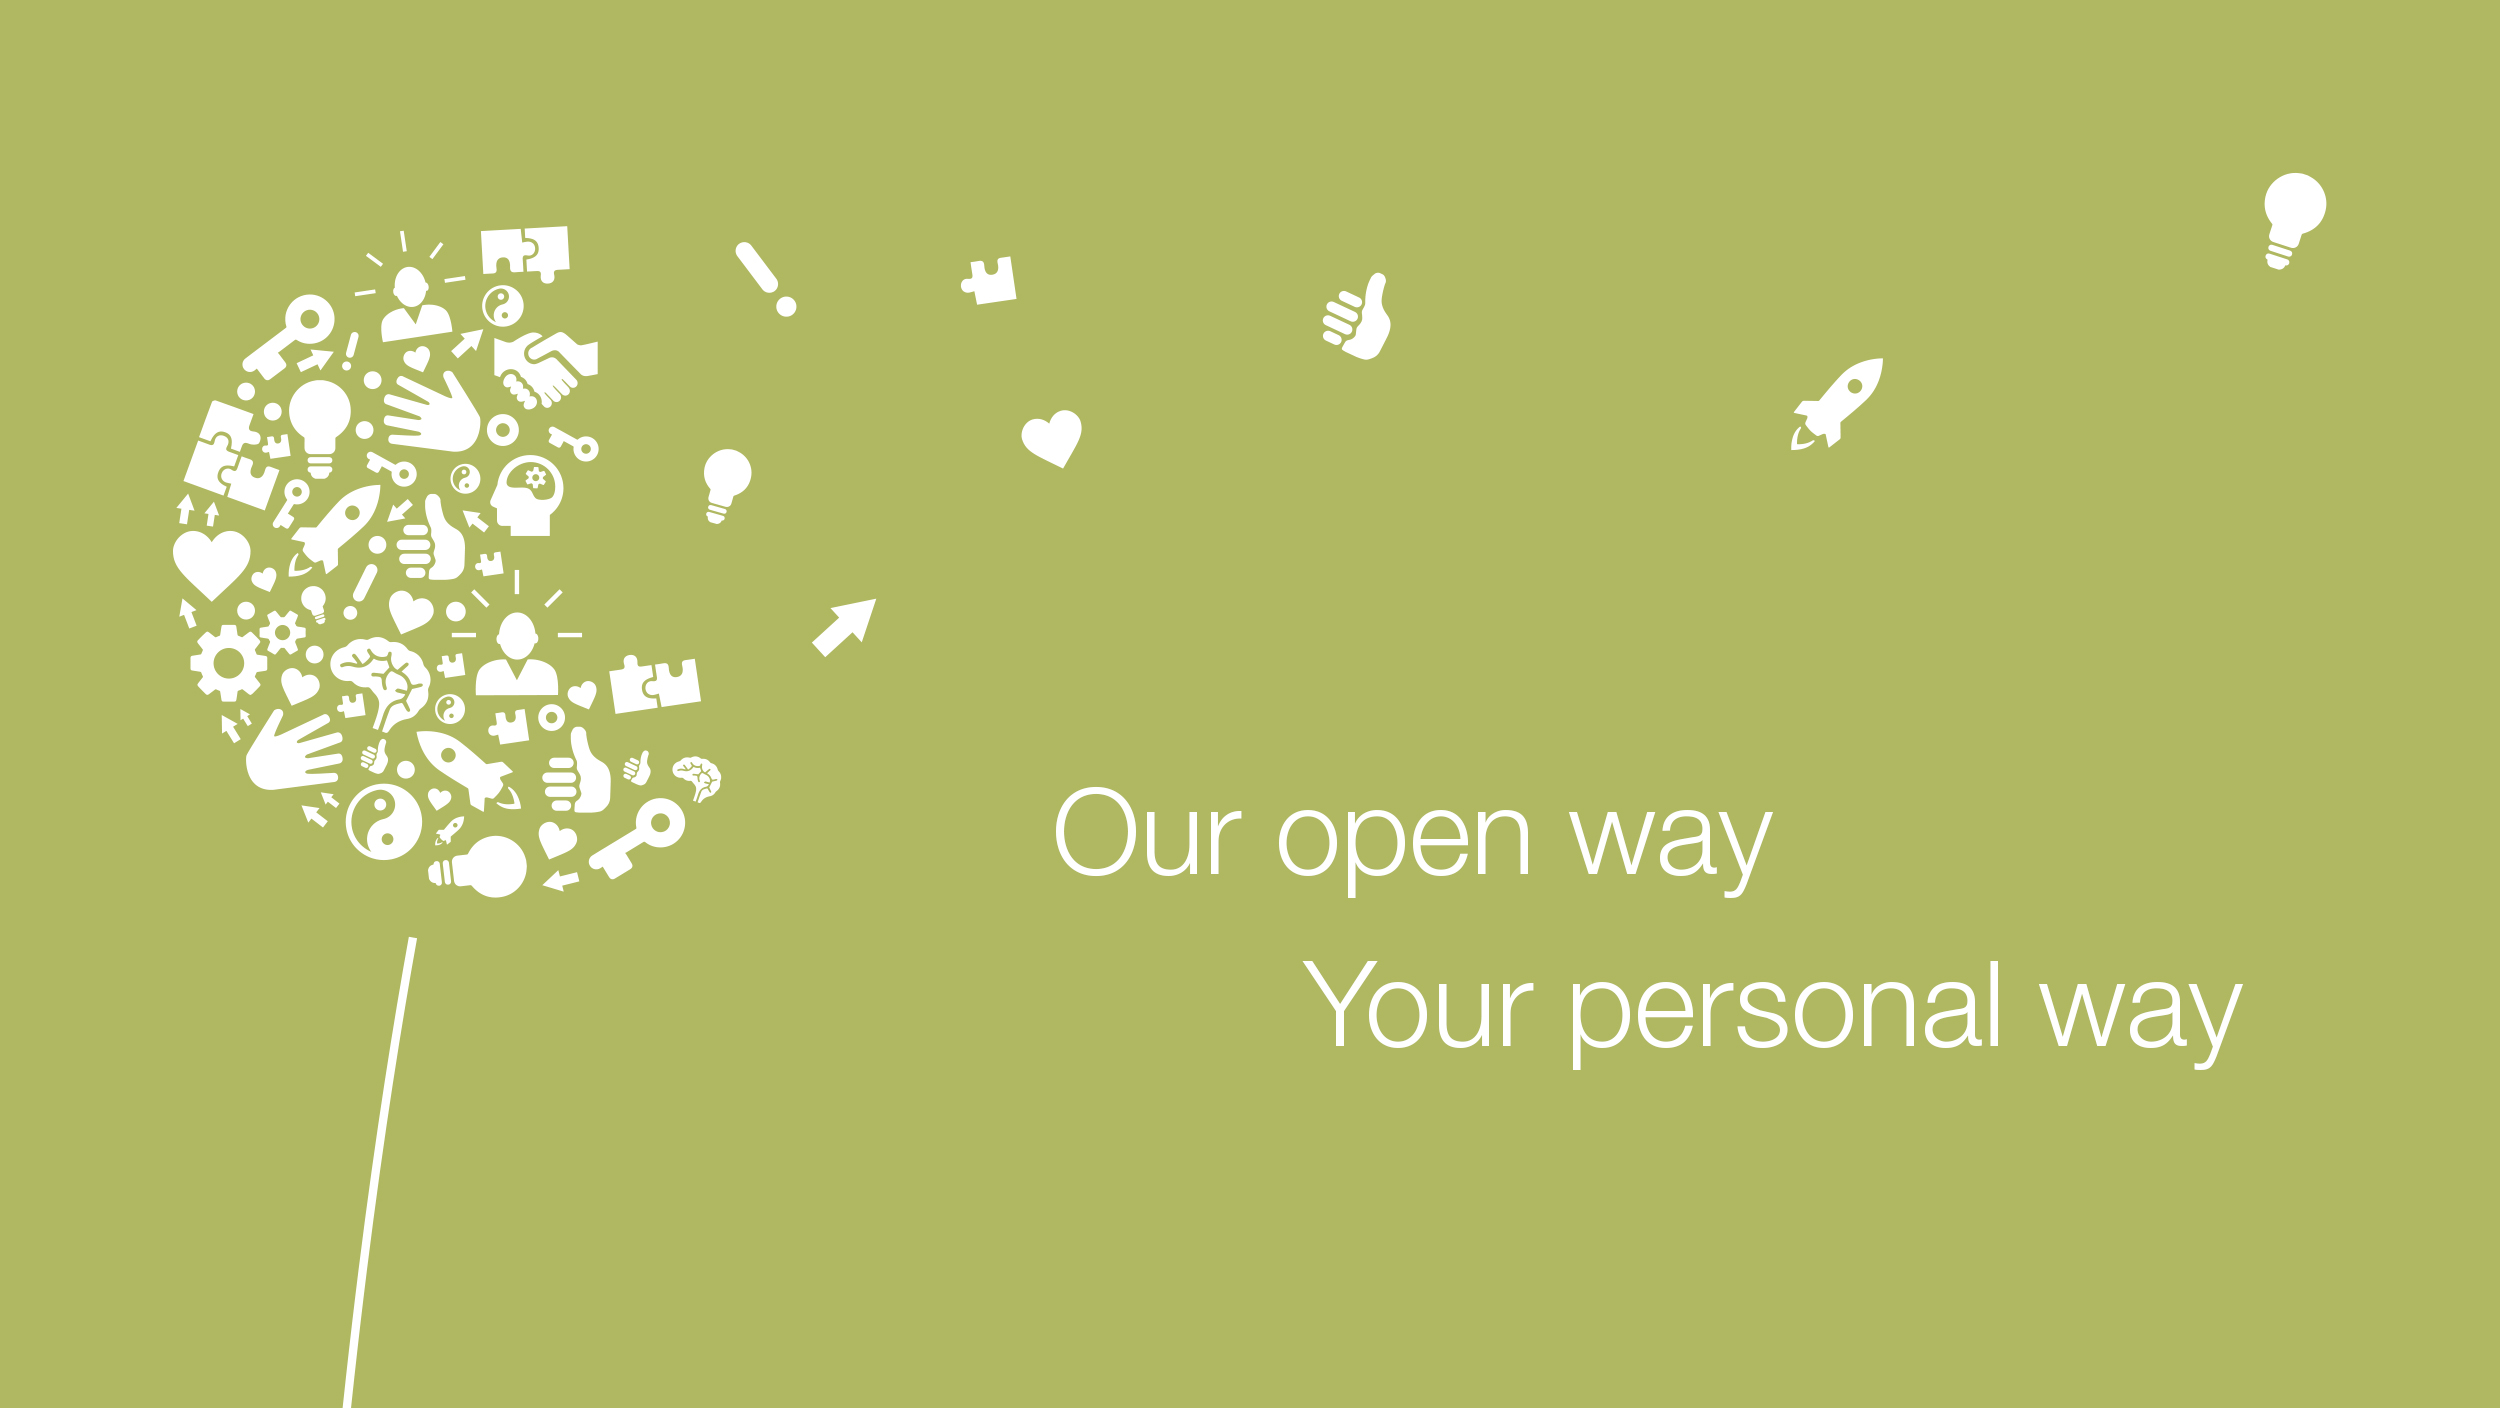 Pusteblume auf Icons, daneben der Slogan: Our open way Your personal way